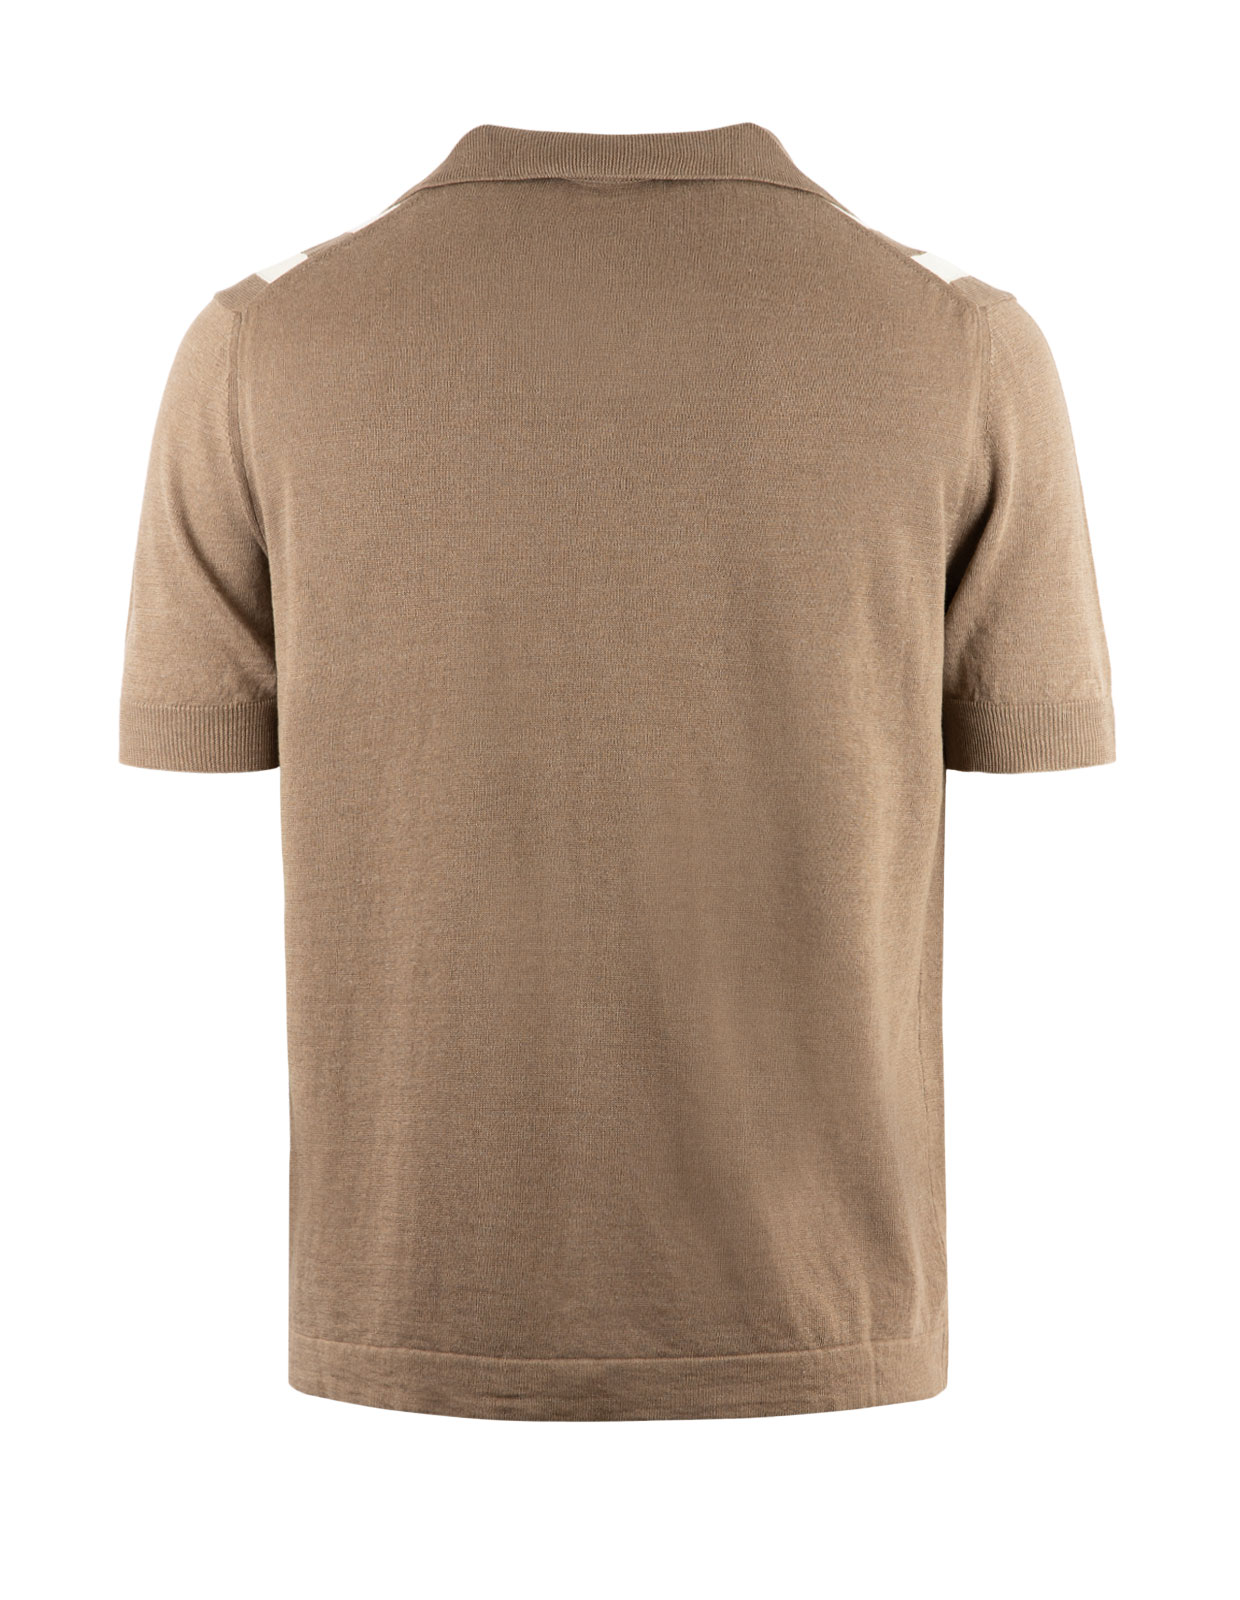 Bowlingskjorta Stickad Kortärmad Grey/Brown